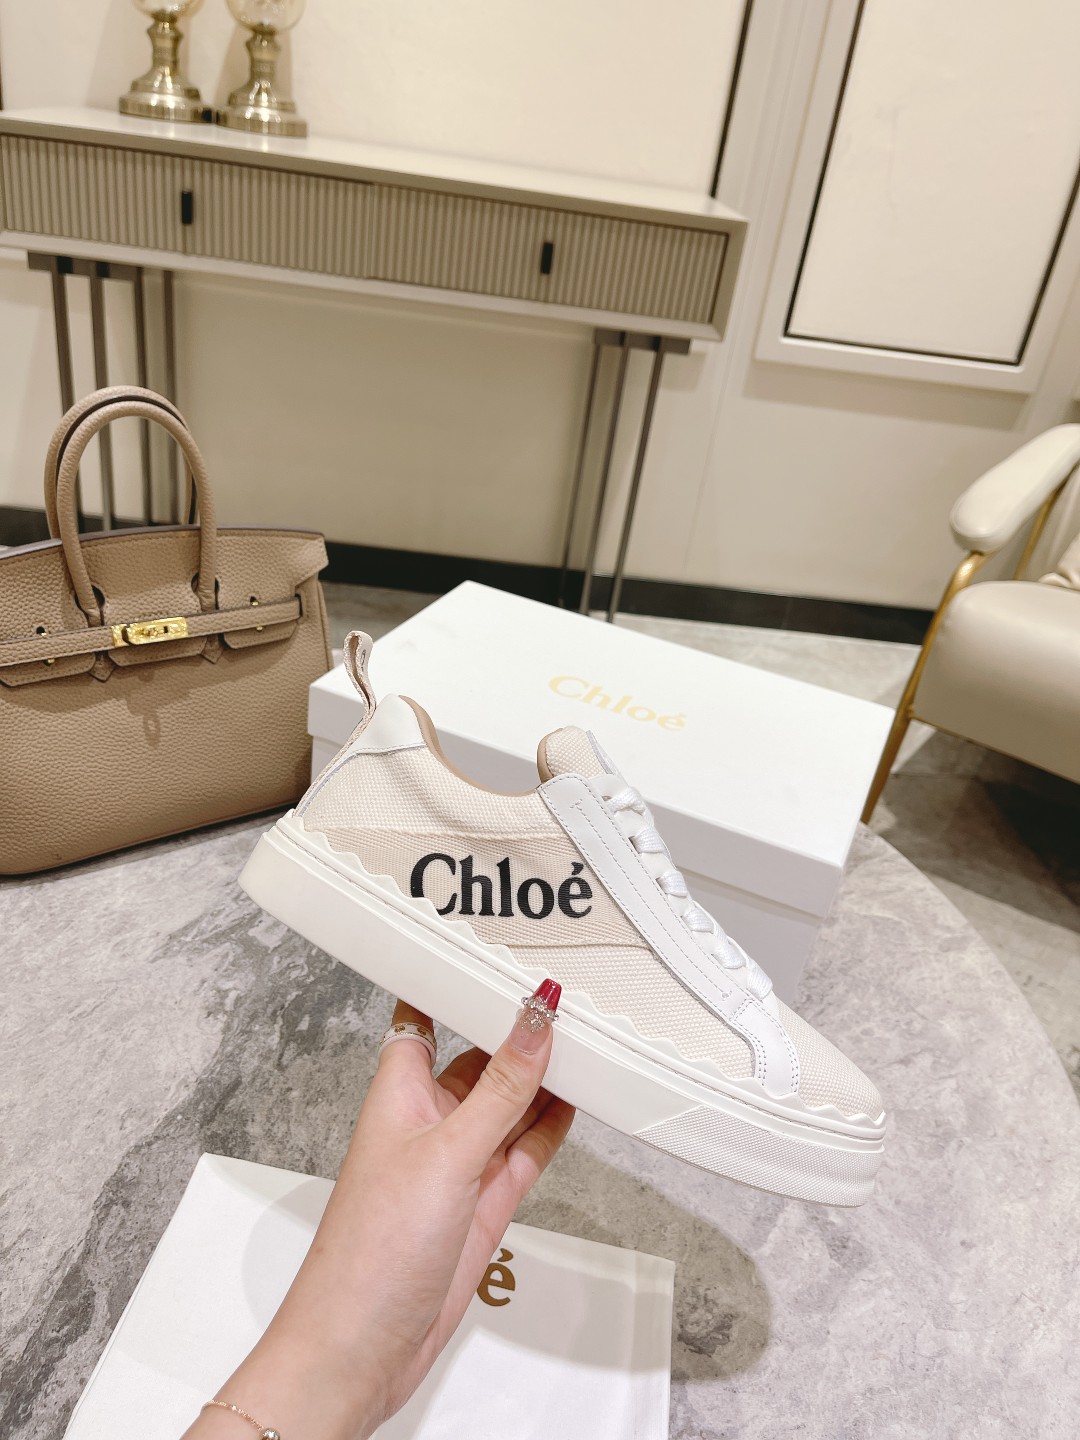 Chloe flats casual shoes 